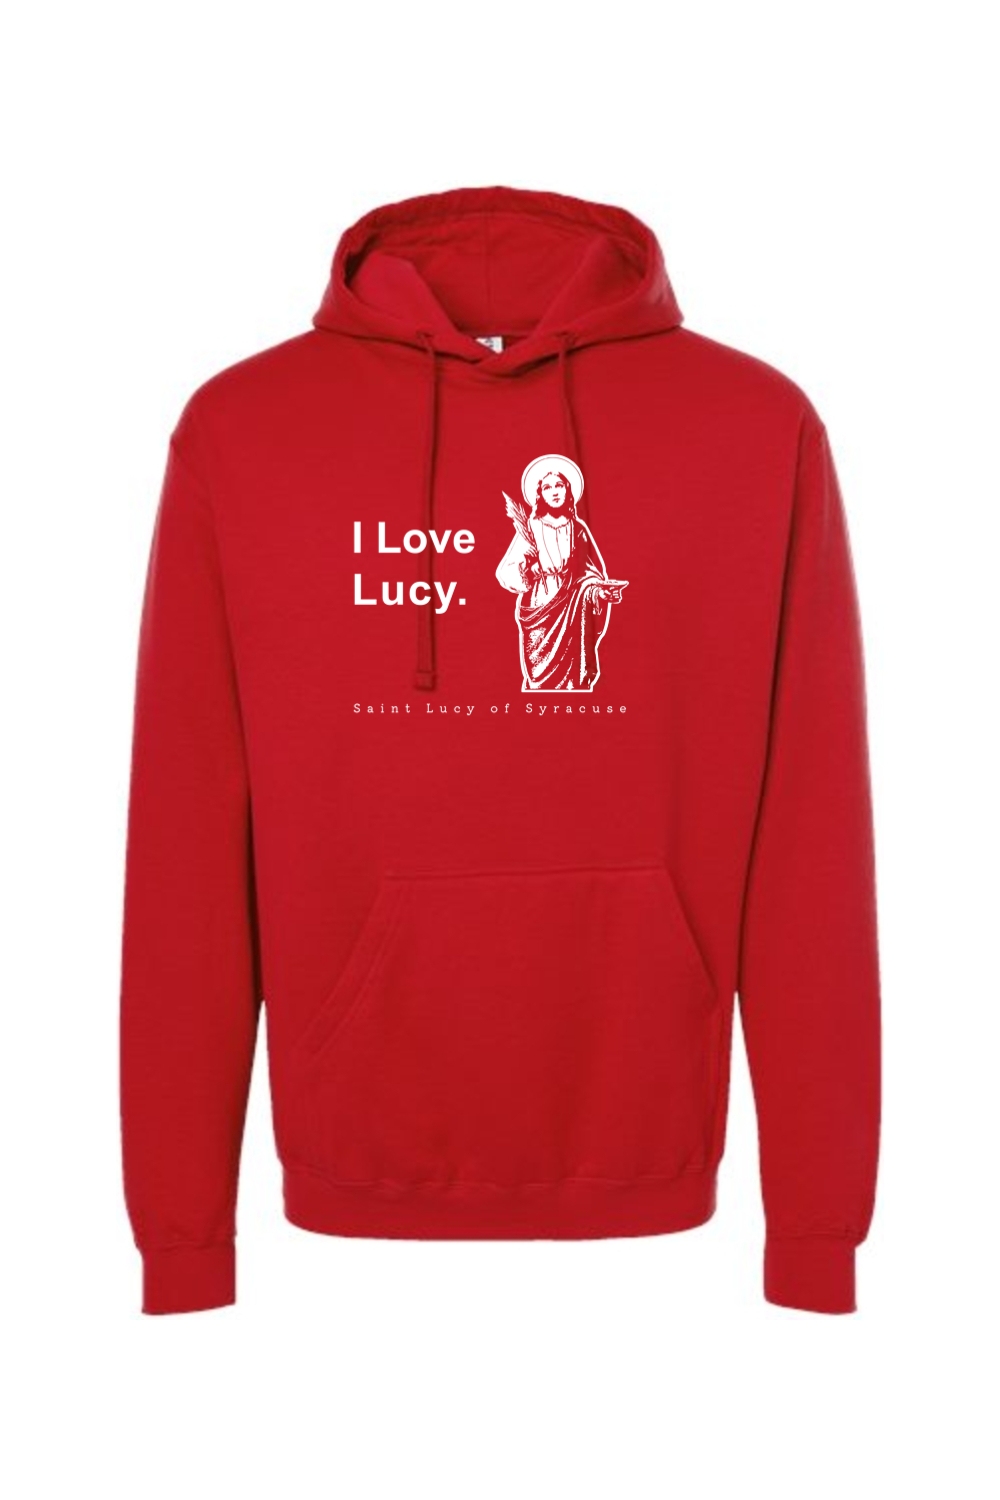 I Love Lucy - St Lucy of Syracuse Hoodie Sweatshirt